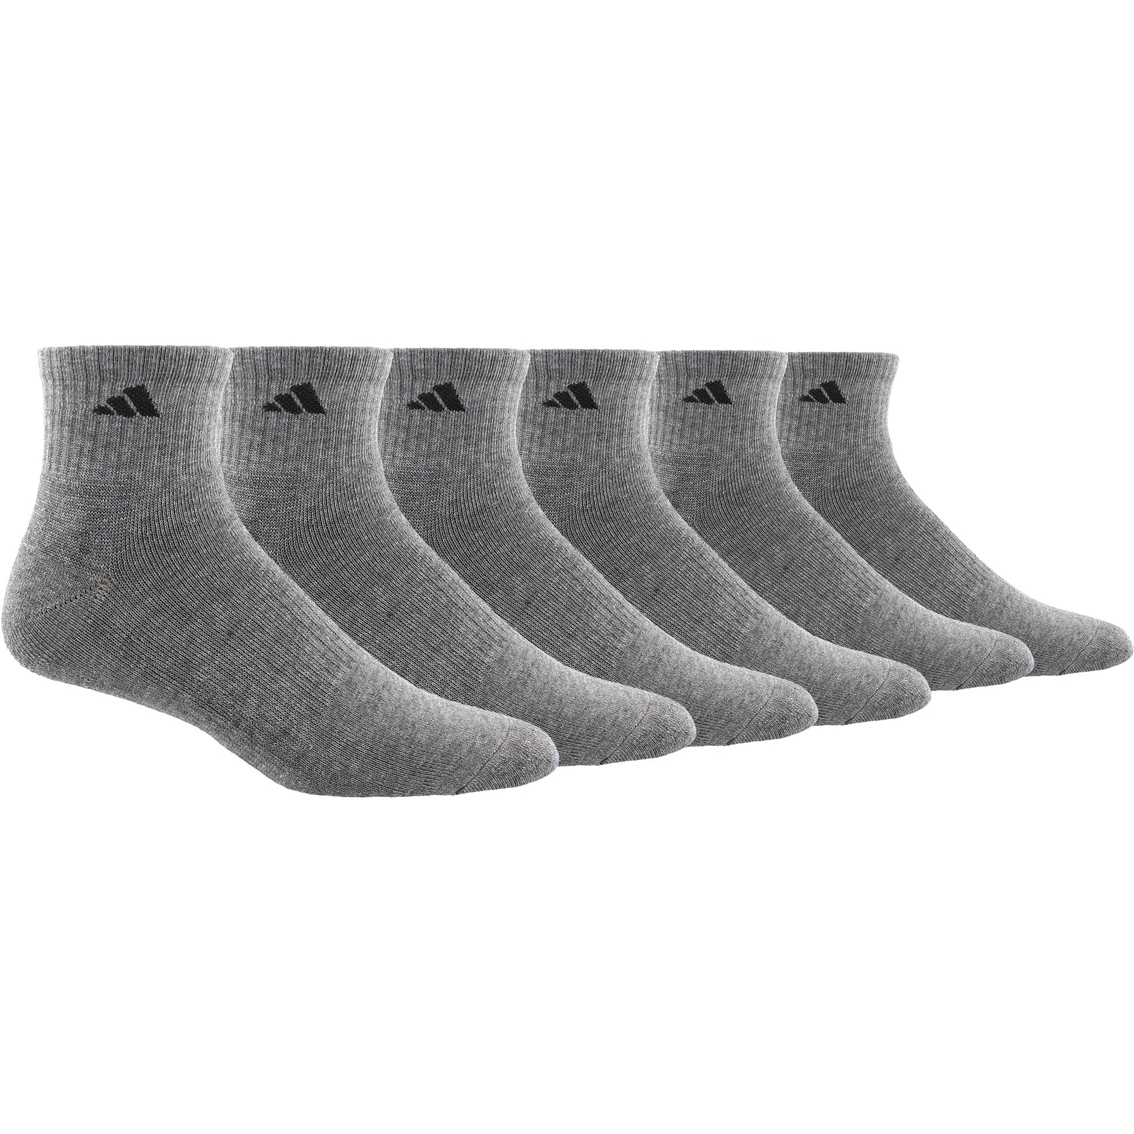 Adidas Athletic Quarter Socks 6 Pk. | Socks | Clothing & Accessories ...